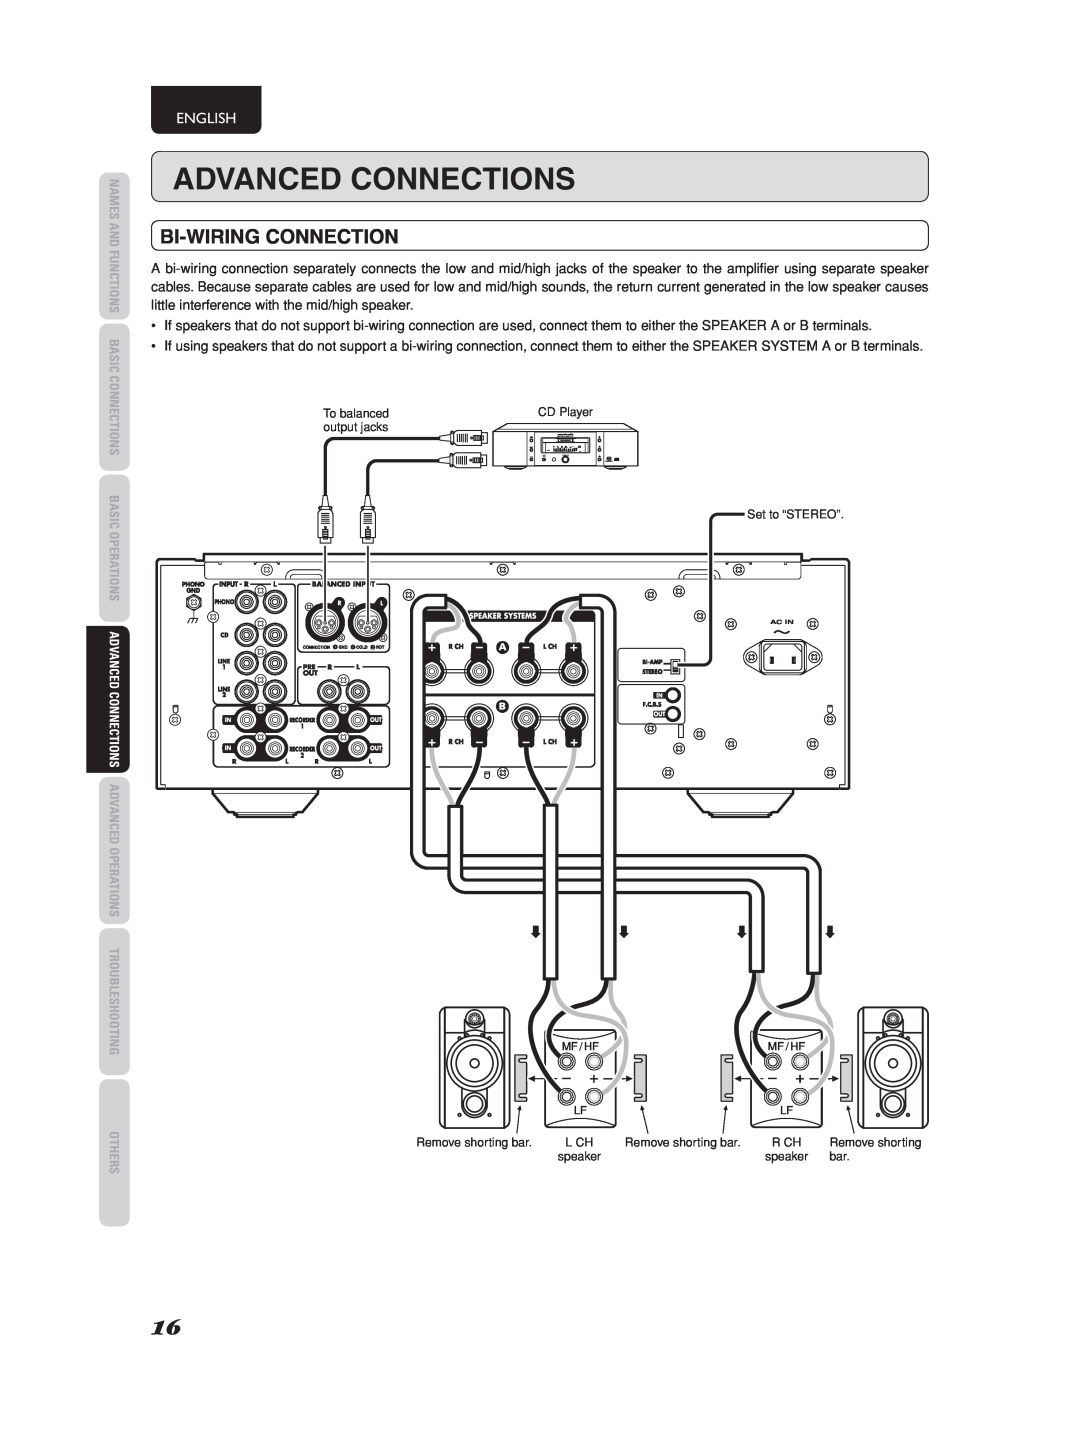 Marantz PM-11S2 manual Advanced Connections, Bi-Wiringconnection, English 